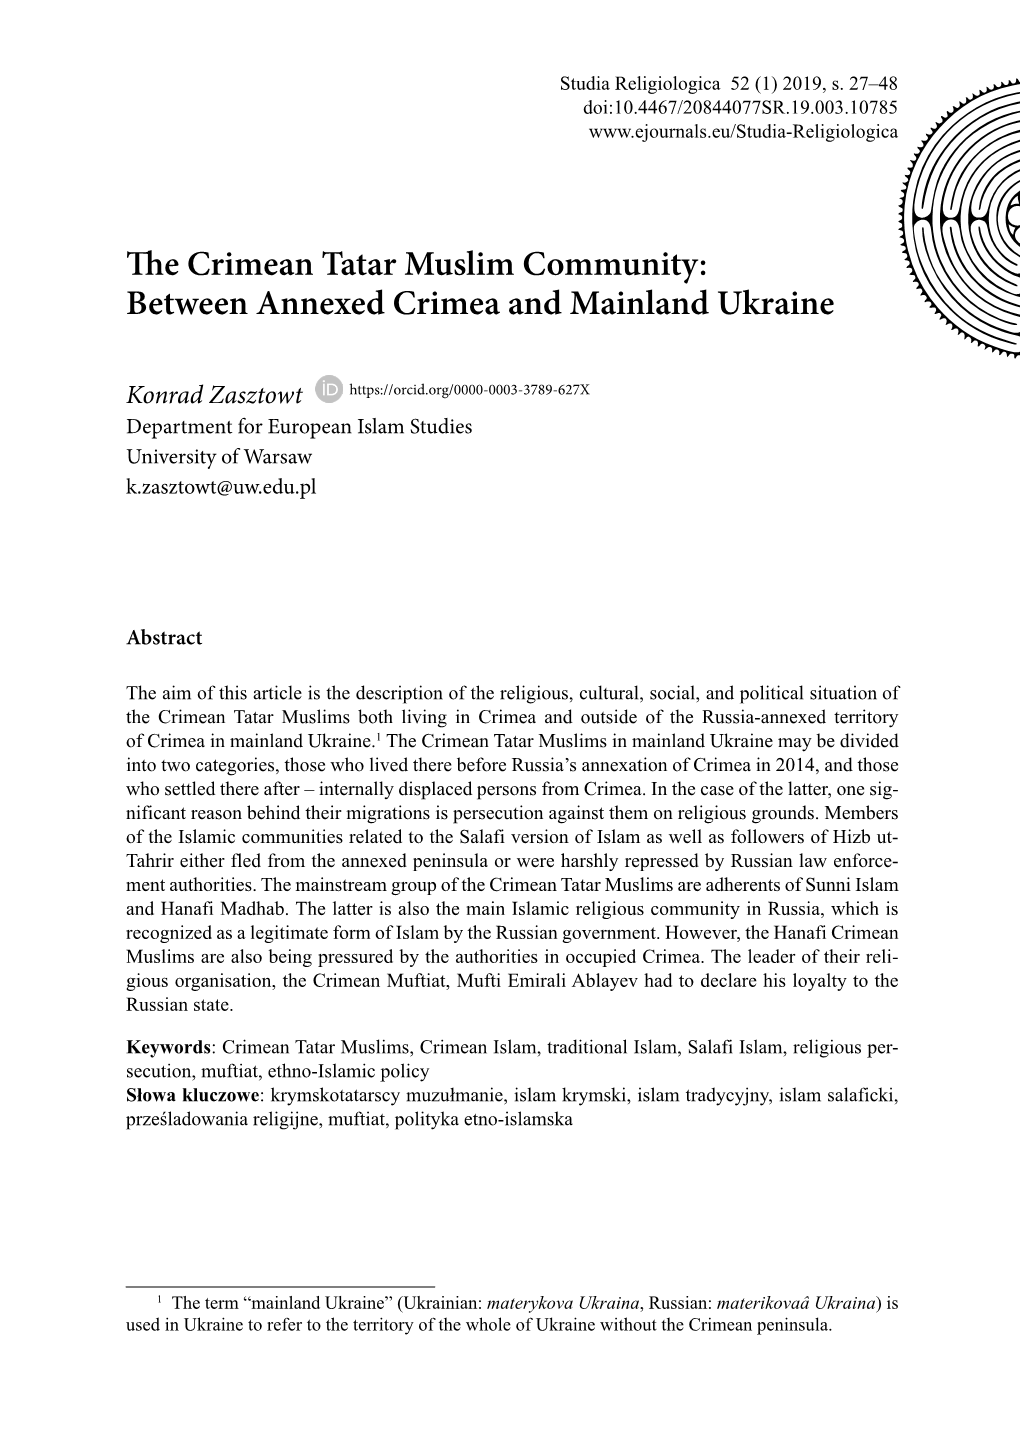 The Crimean Tatar Muslim Community: Between Annexed Crimea and Mainland Ukraine